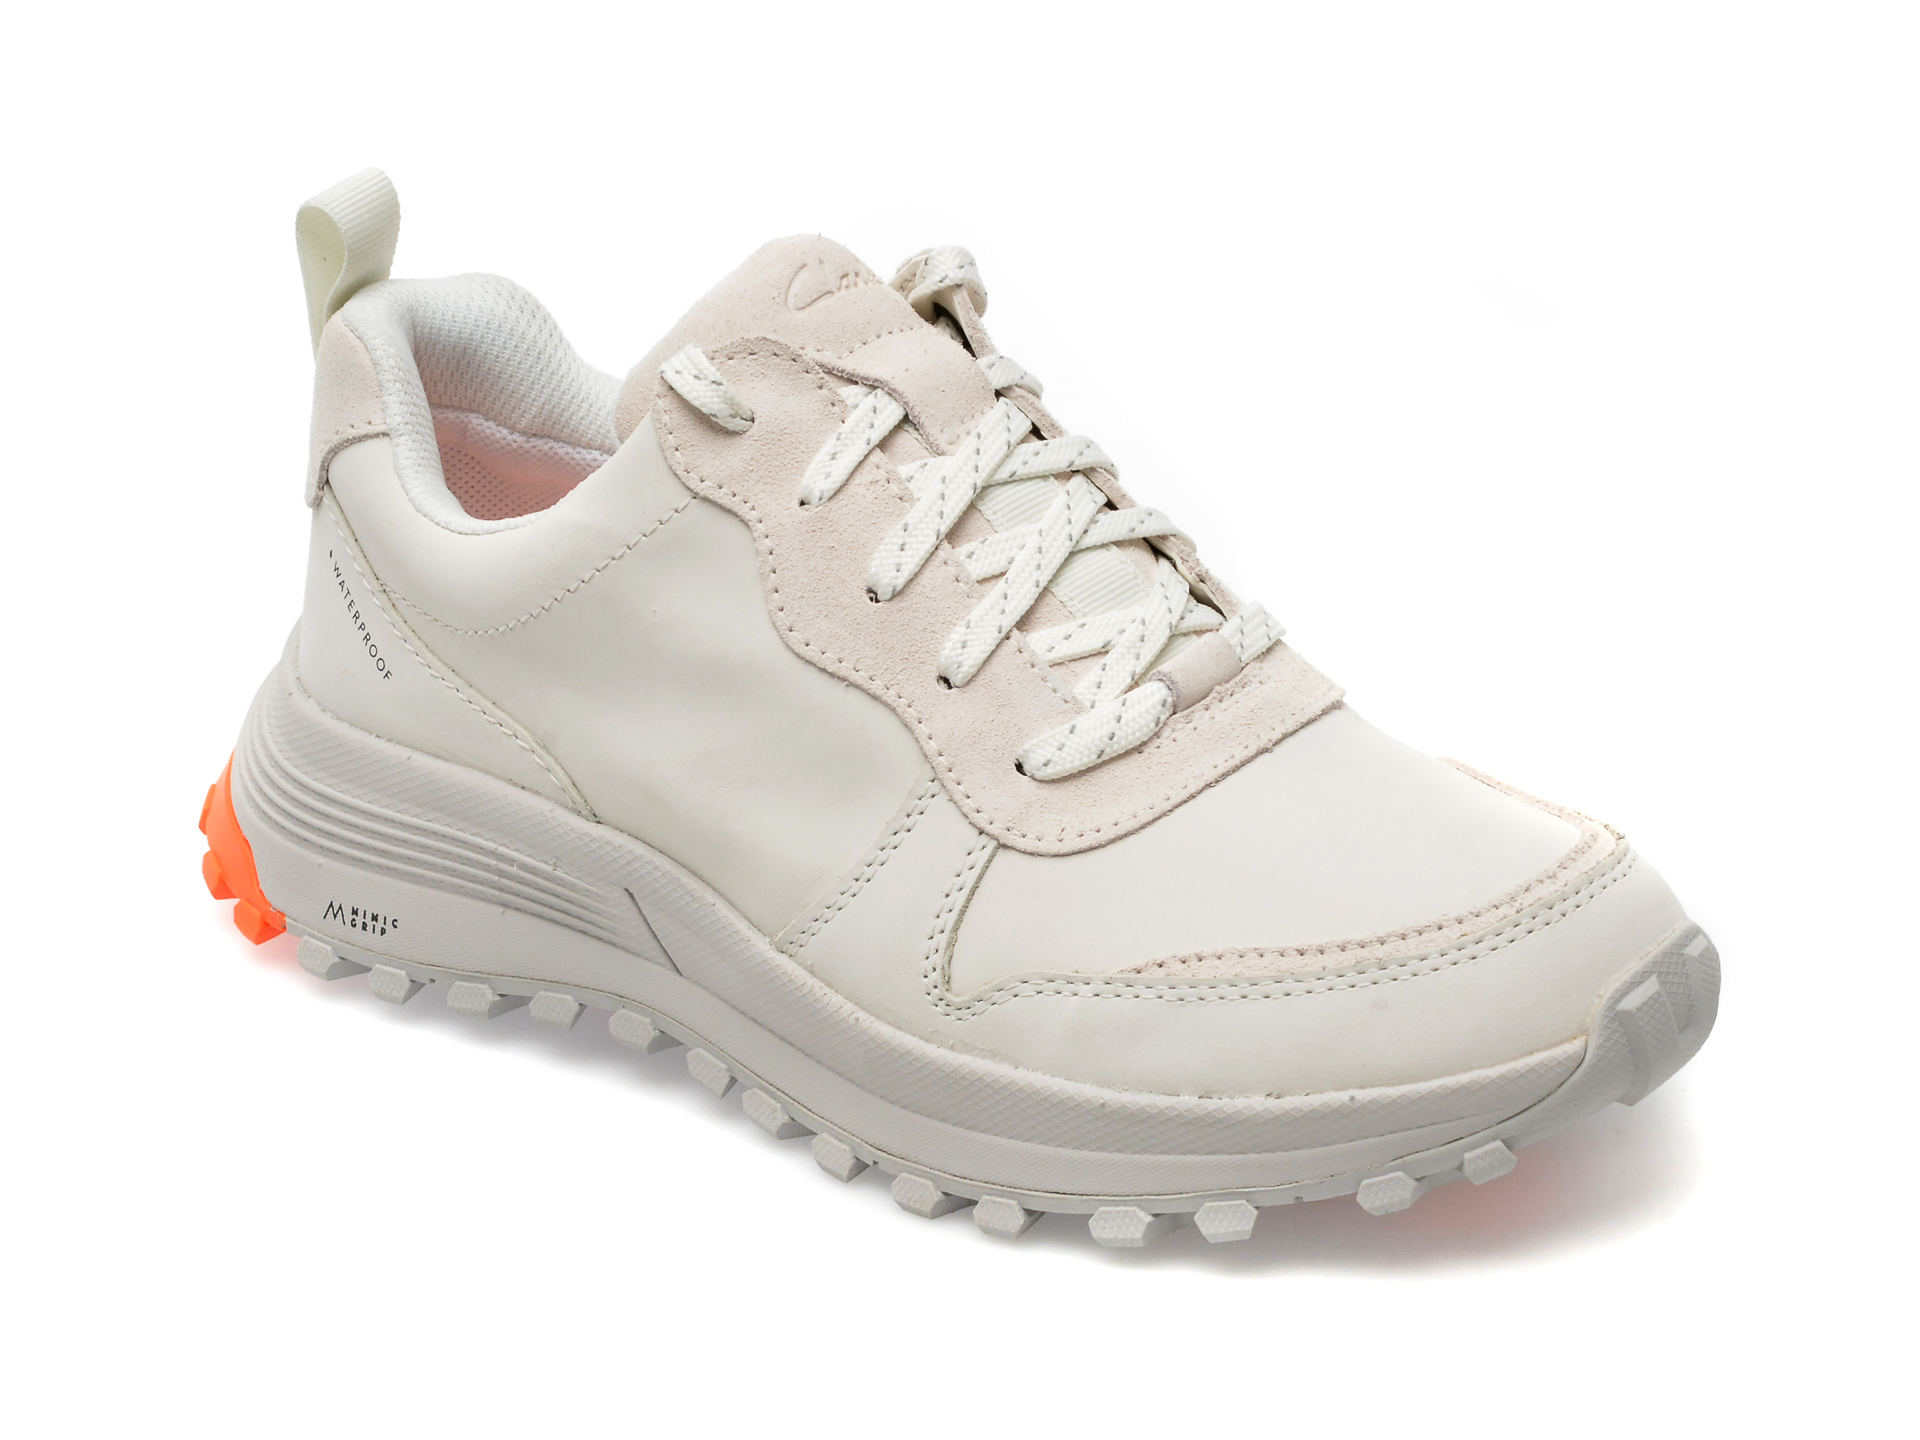 Pantofi CLARKS albi, ATLTREKFREEWP 13-2, din nabuc femei 2023-03-21